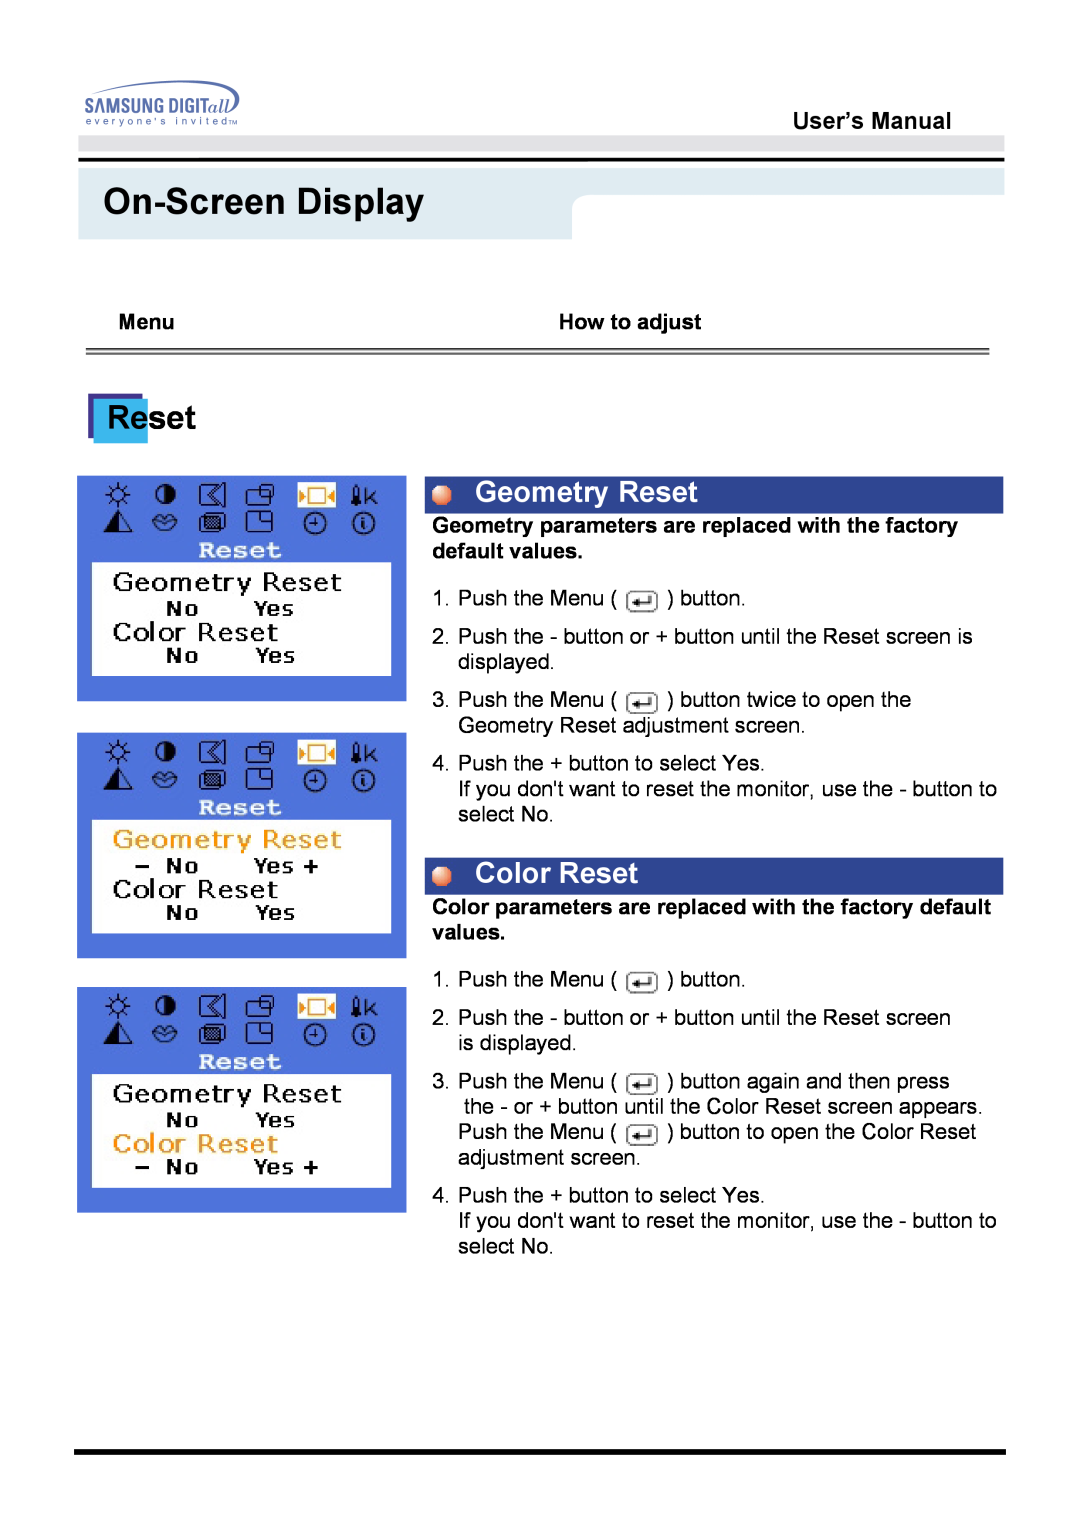 Samsung 760TFT manual On-Screen Display, Geometry Reset, Color Reset, User’s Manual, Menu, How to adjust 